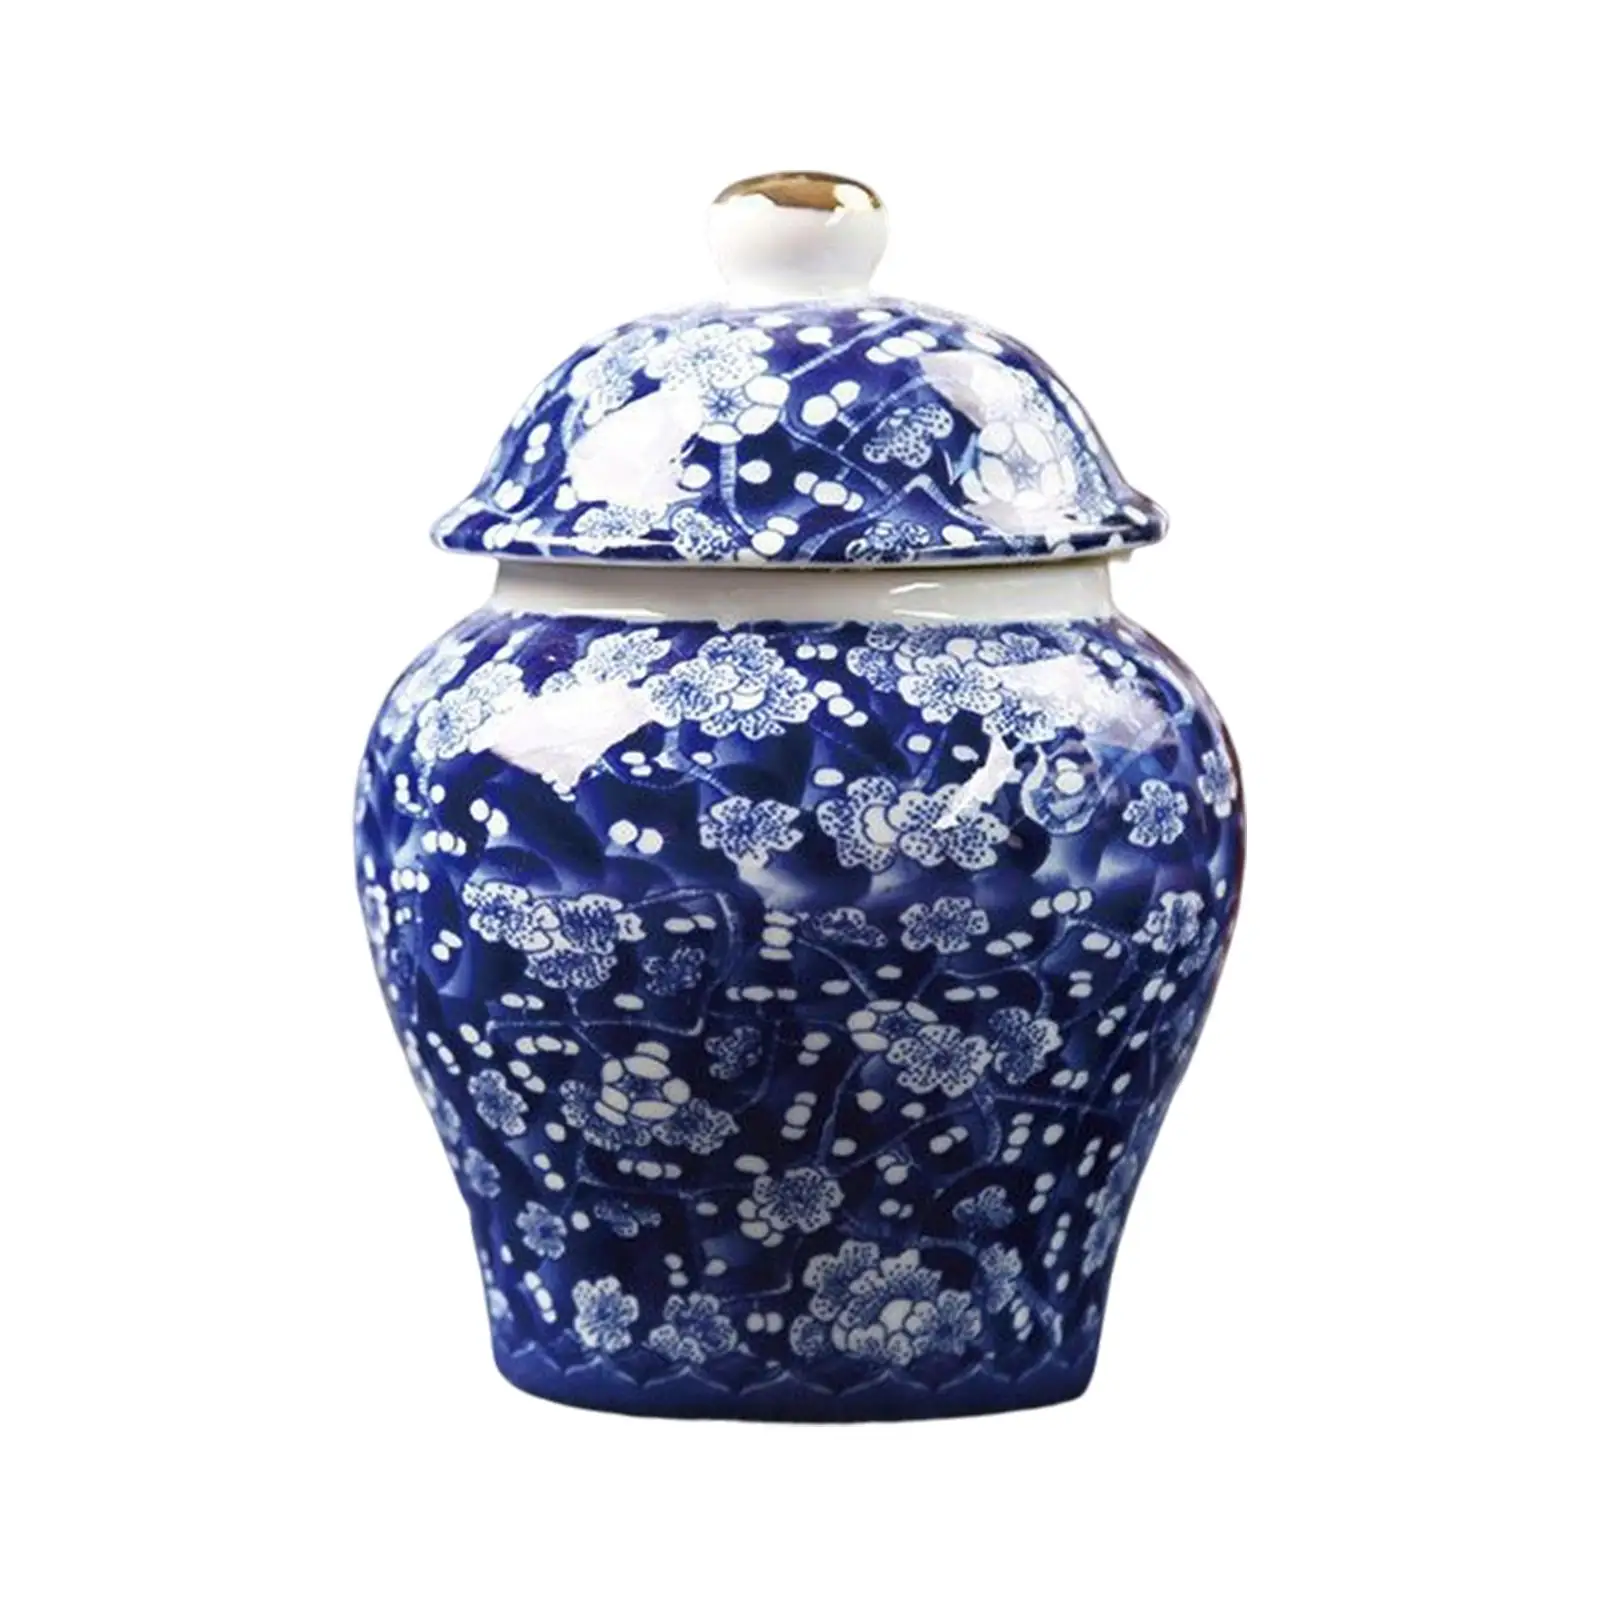 Ancient Chinese Style Ceramic Ginger Jar Centerpiece Flower Vase 330ml